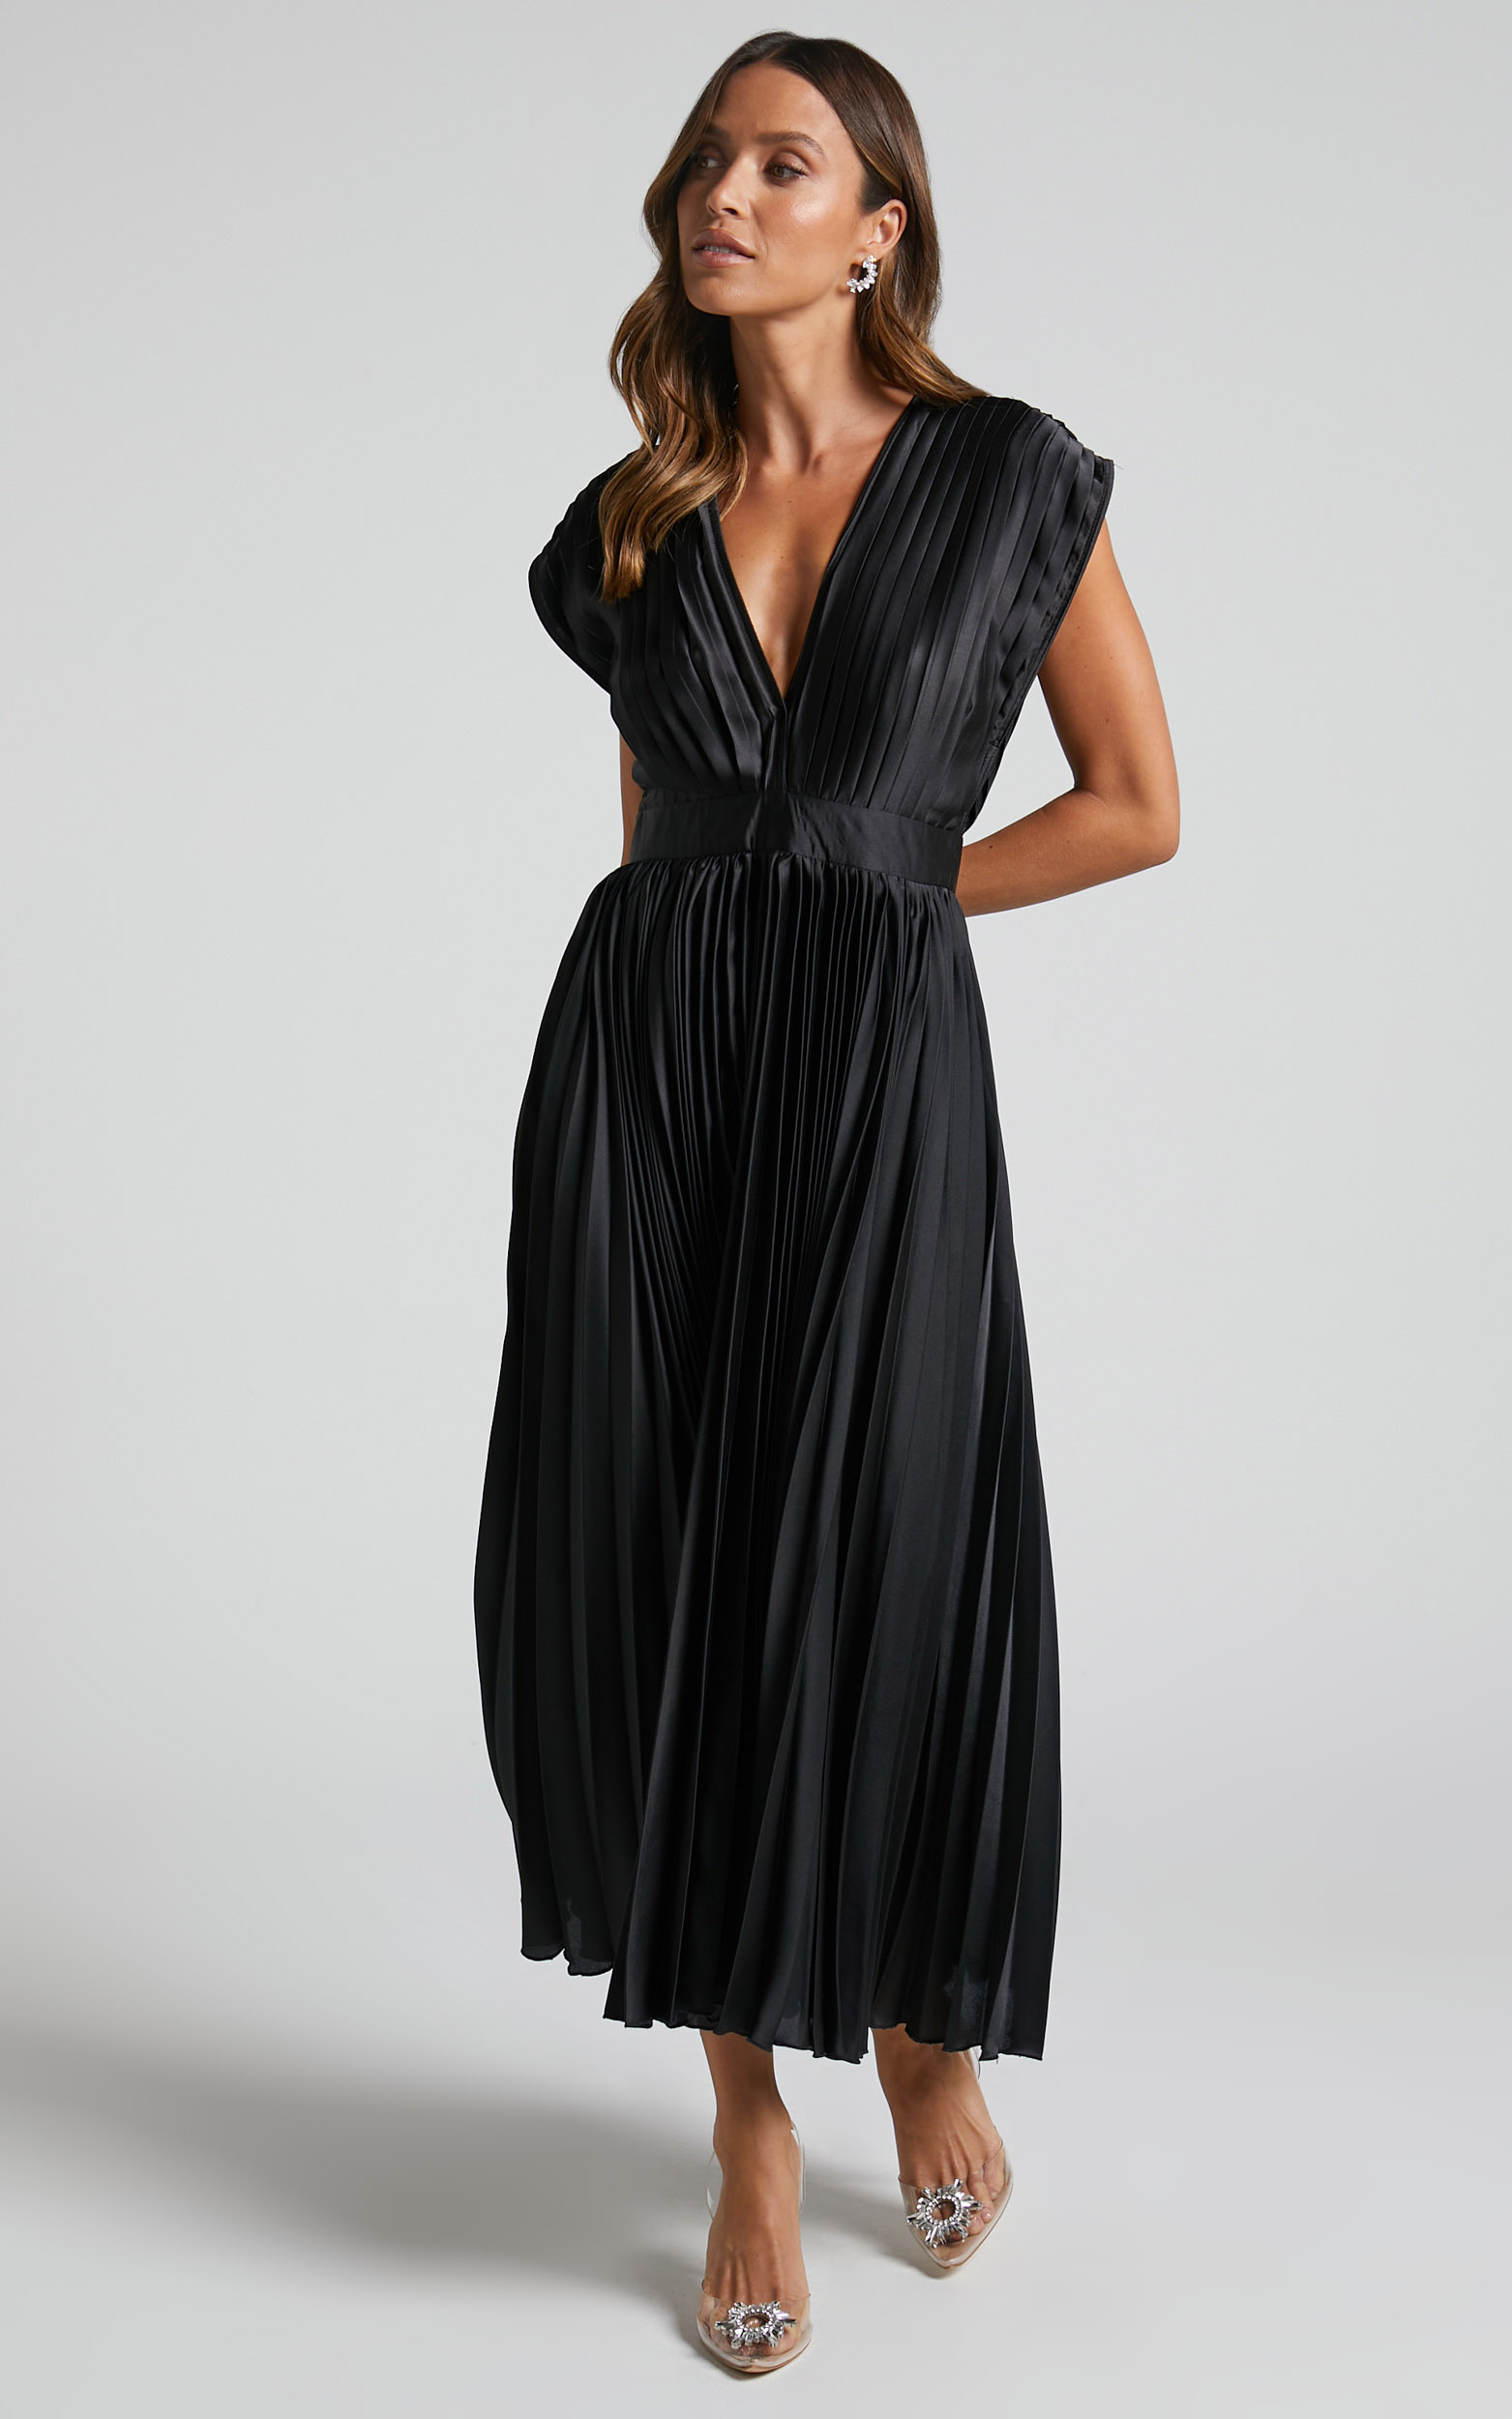 Della Maxi Dress - Plunge Neck Short Sleeve Pleated Dress in Black - 06, BLK1, hi-res image number null